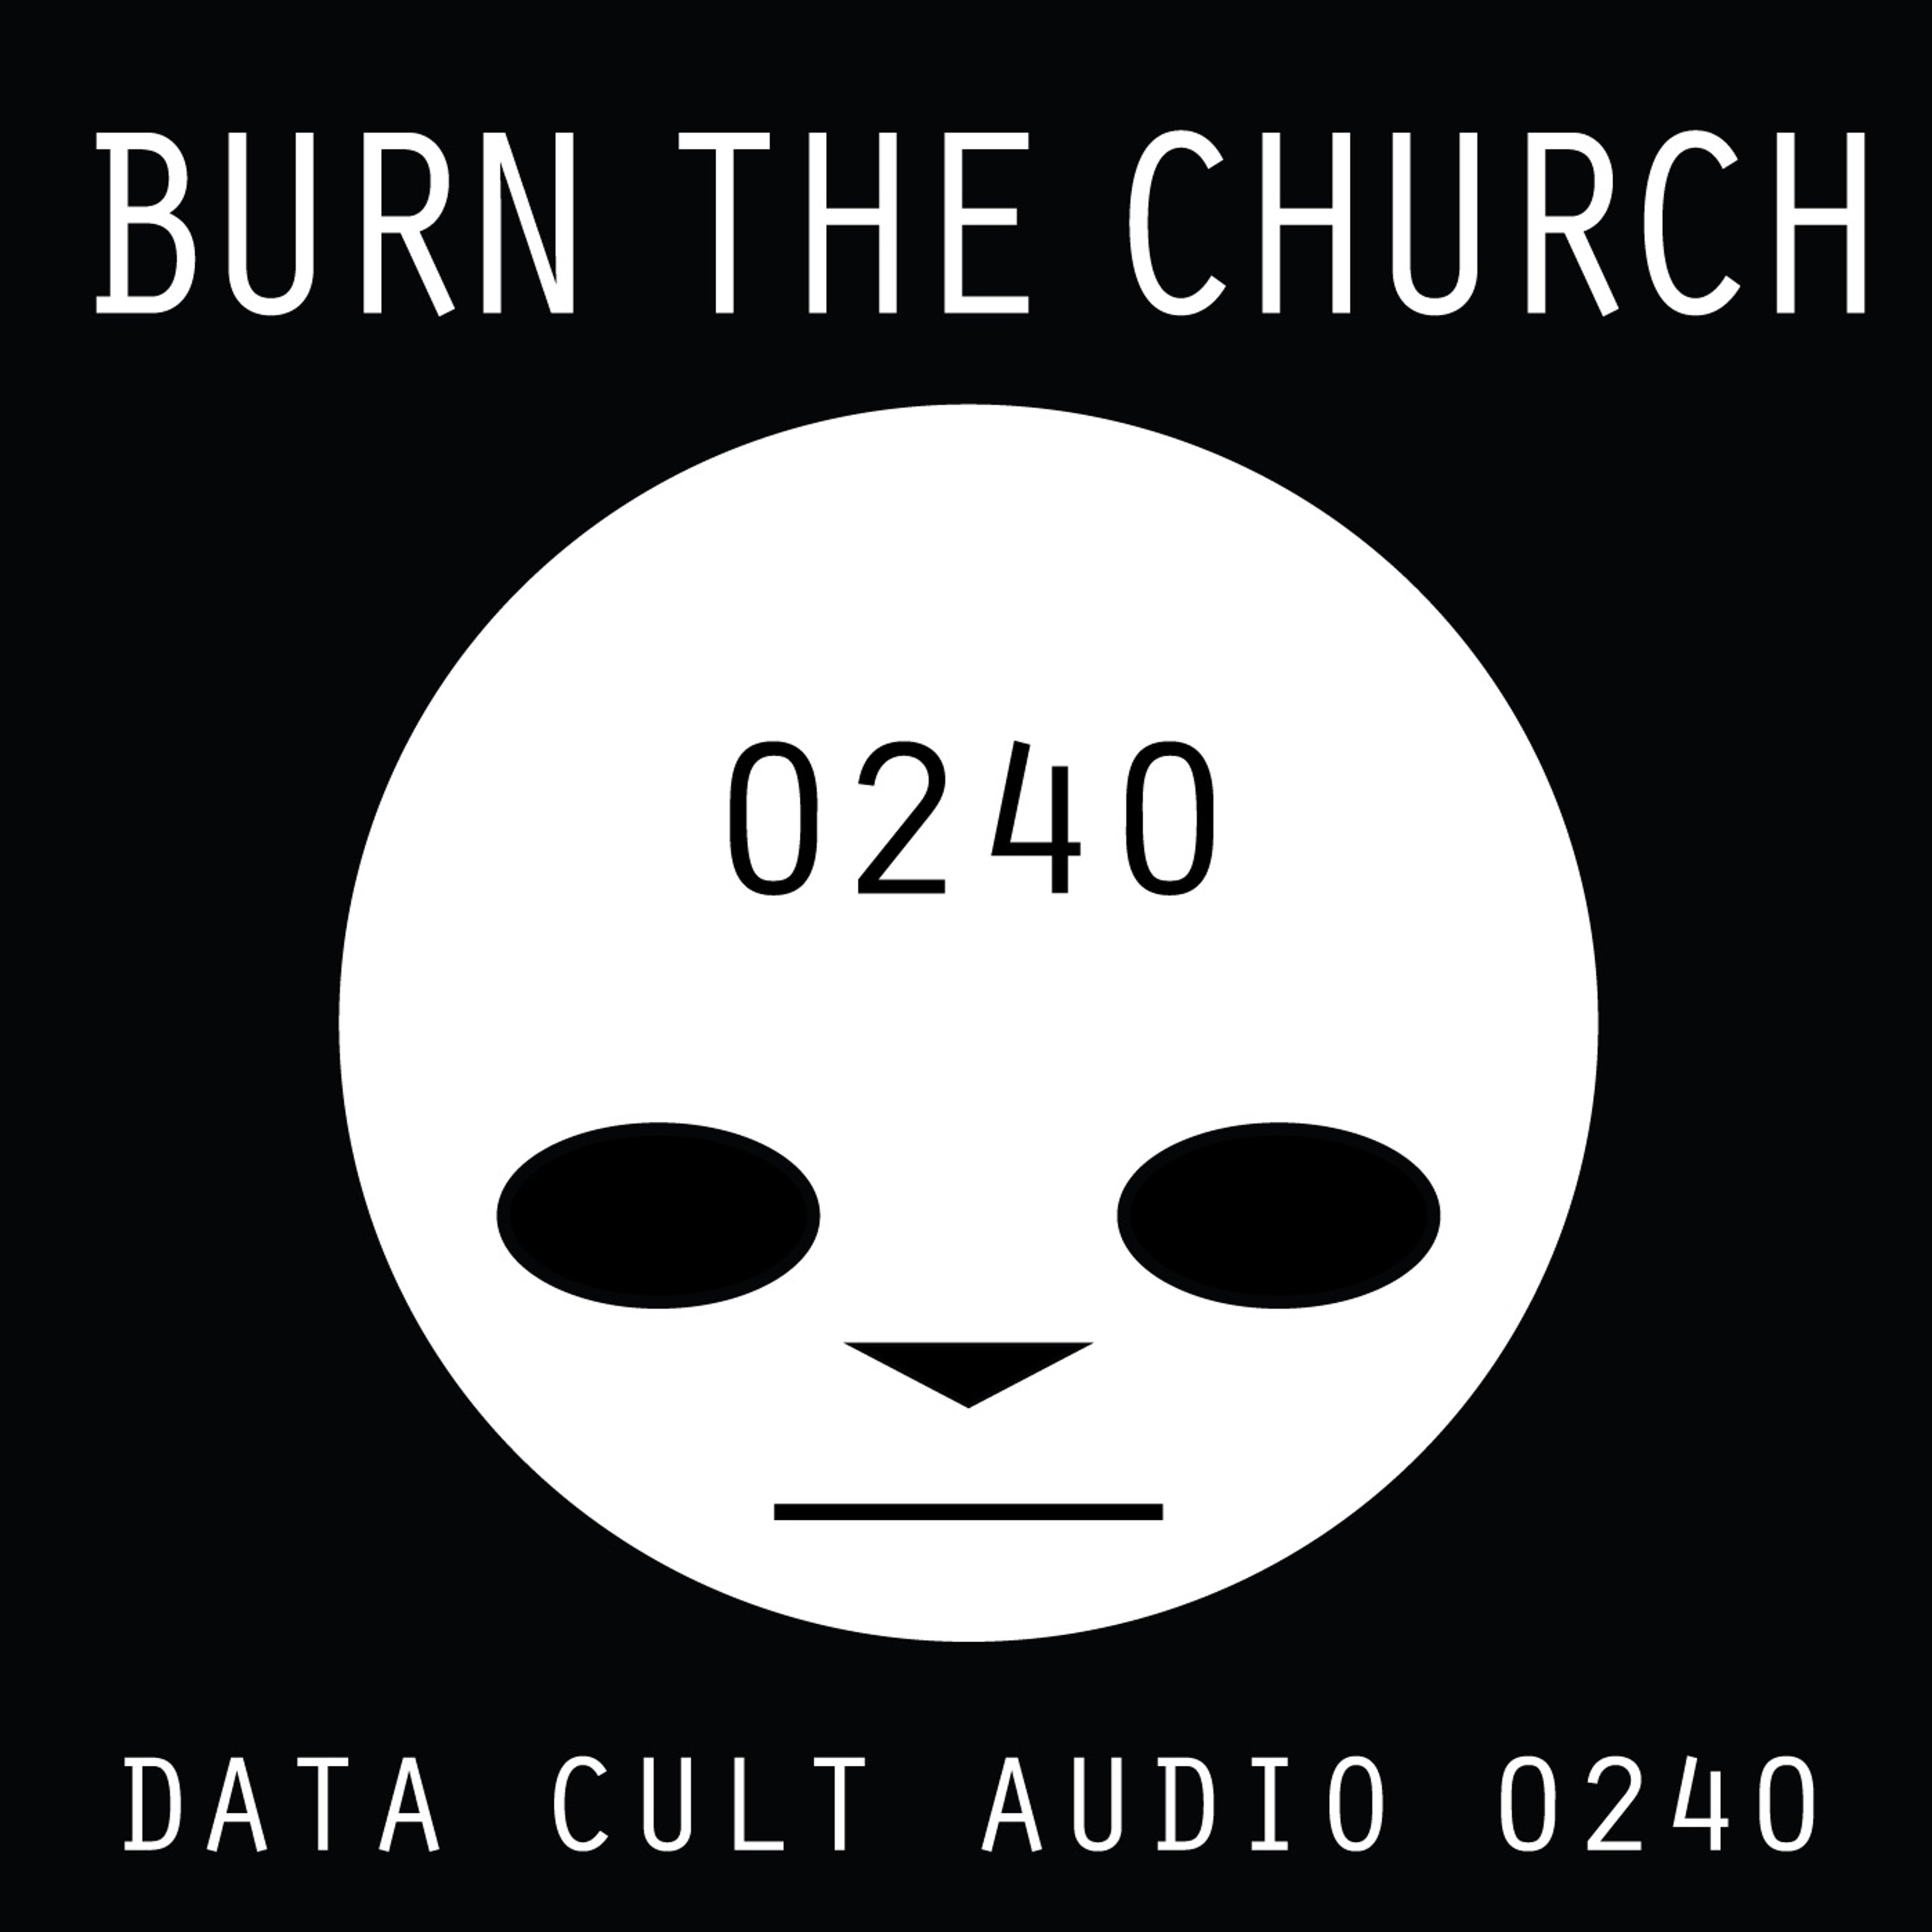 Data Cult Audio 0240 - Burn The Church